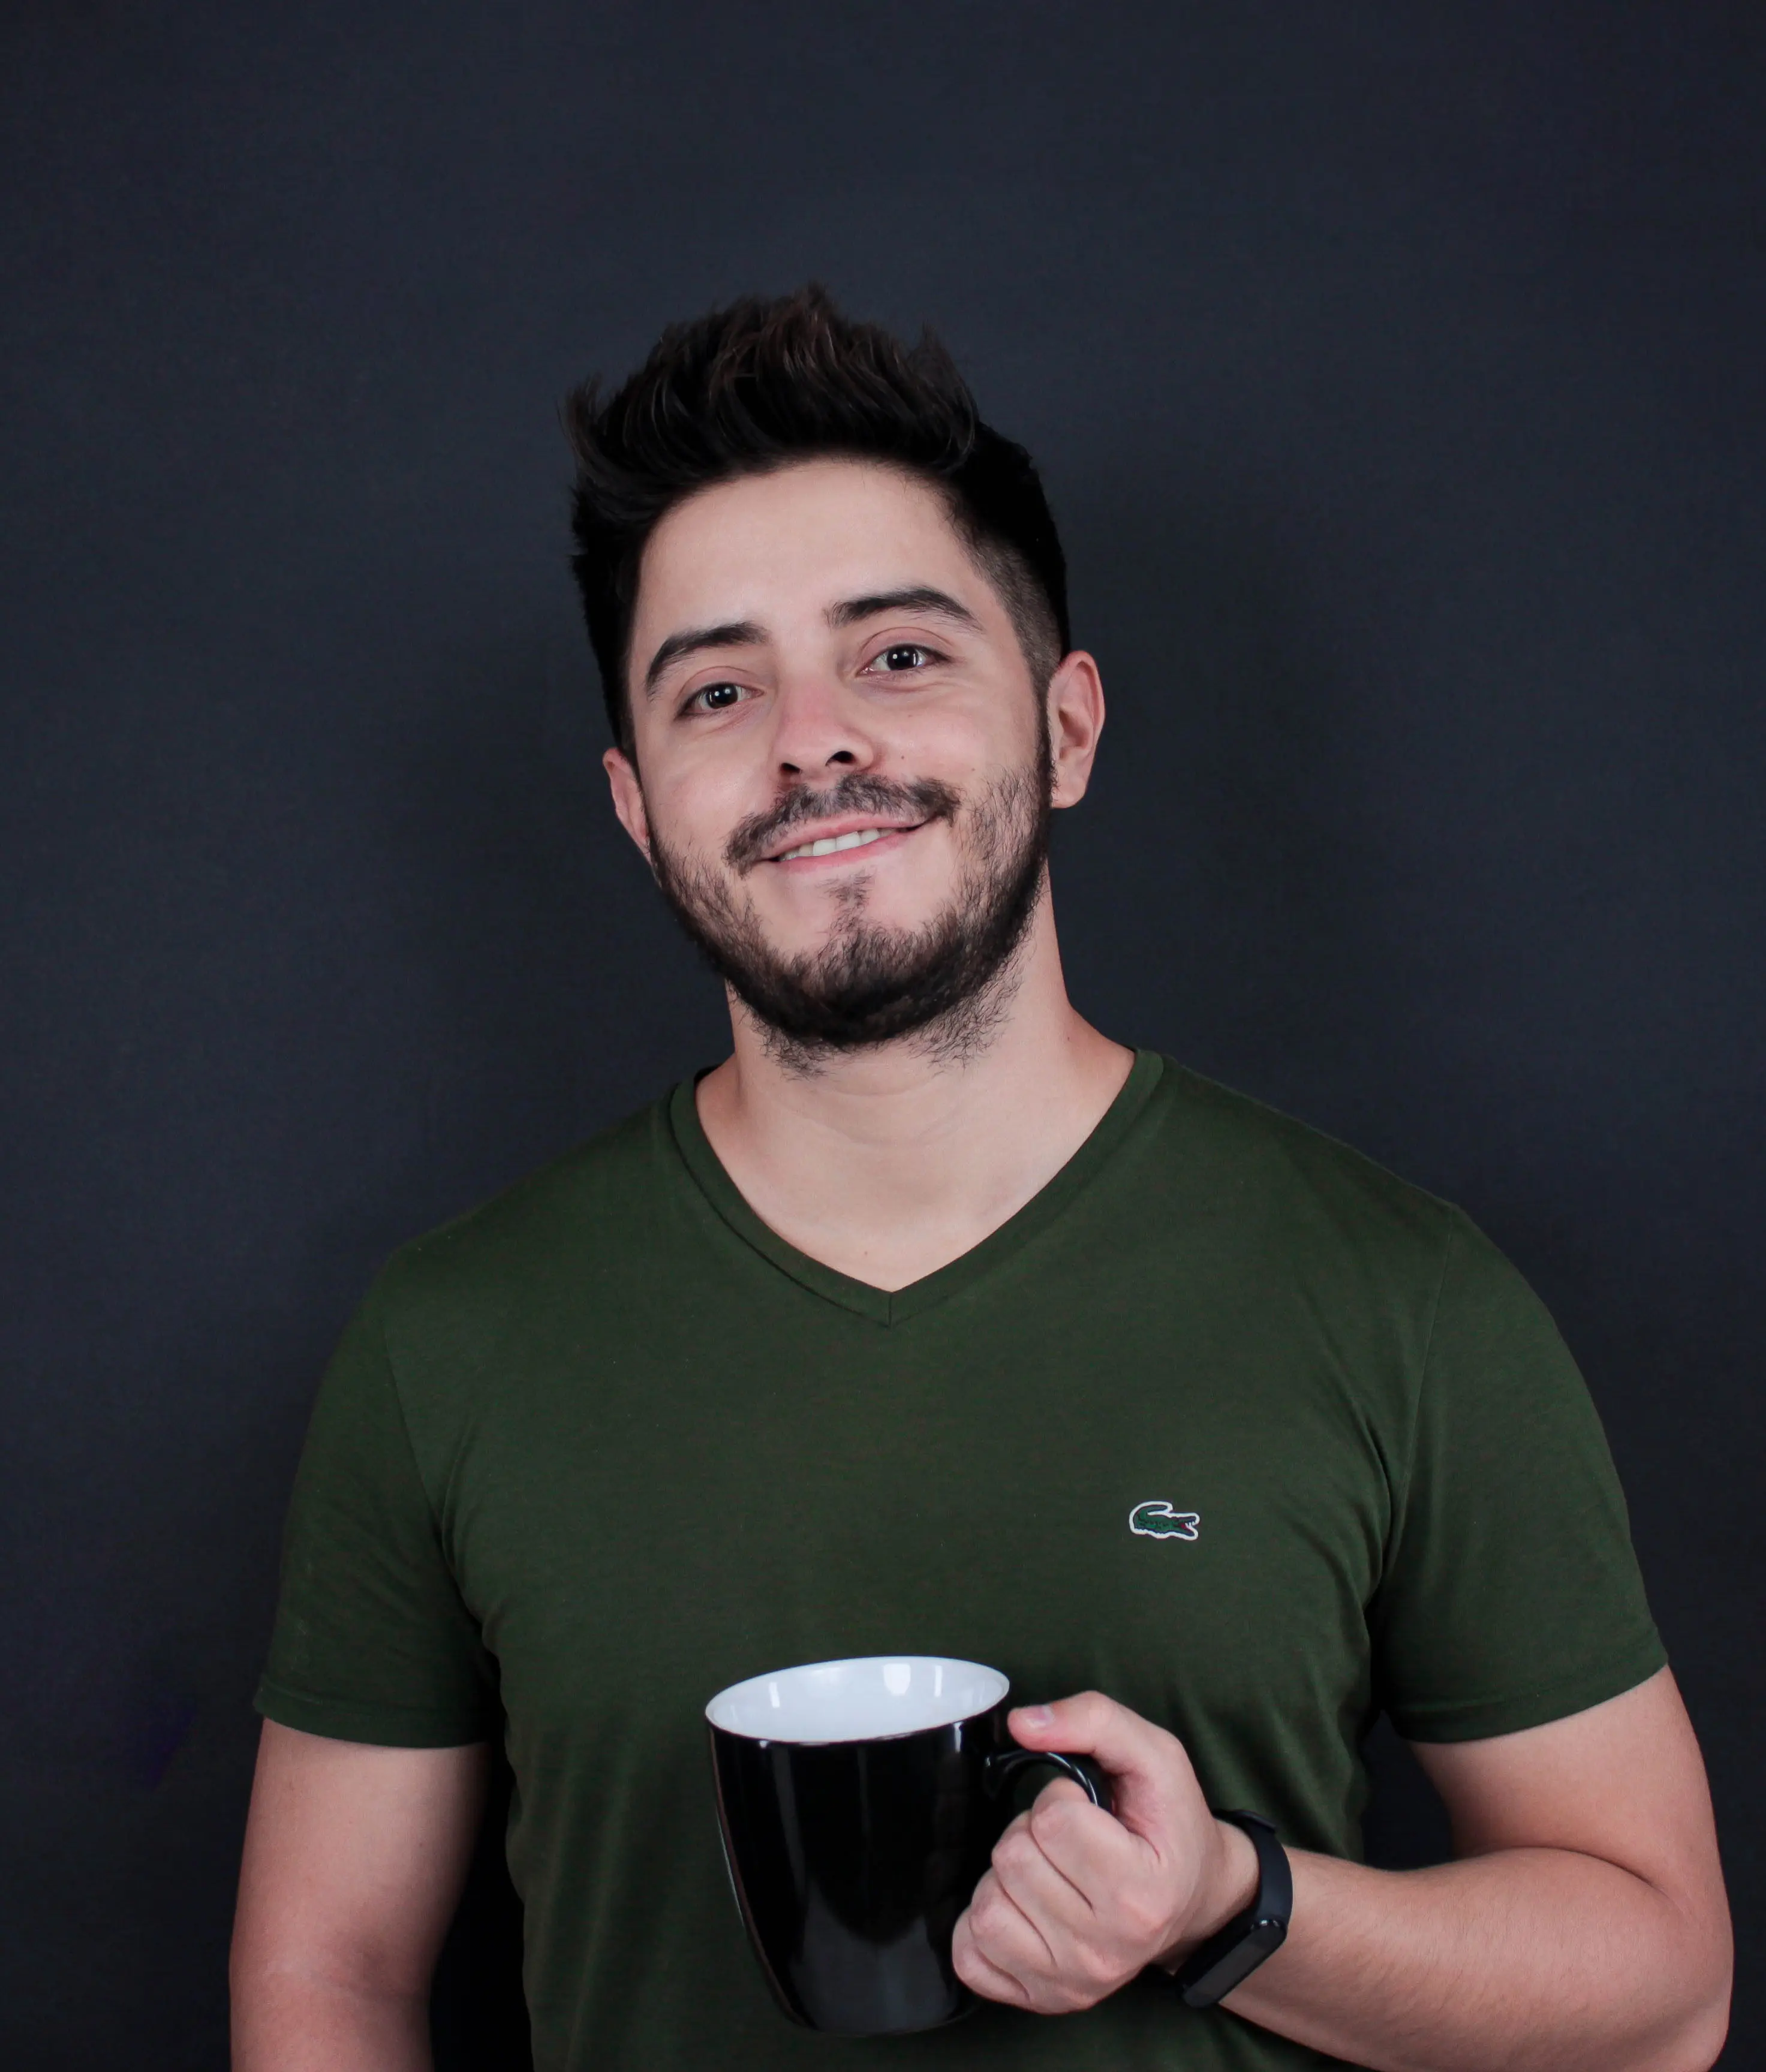 Imagen de perfil de Matias, tomando una taza de café